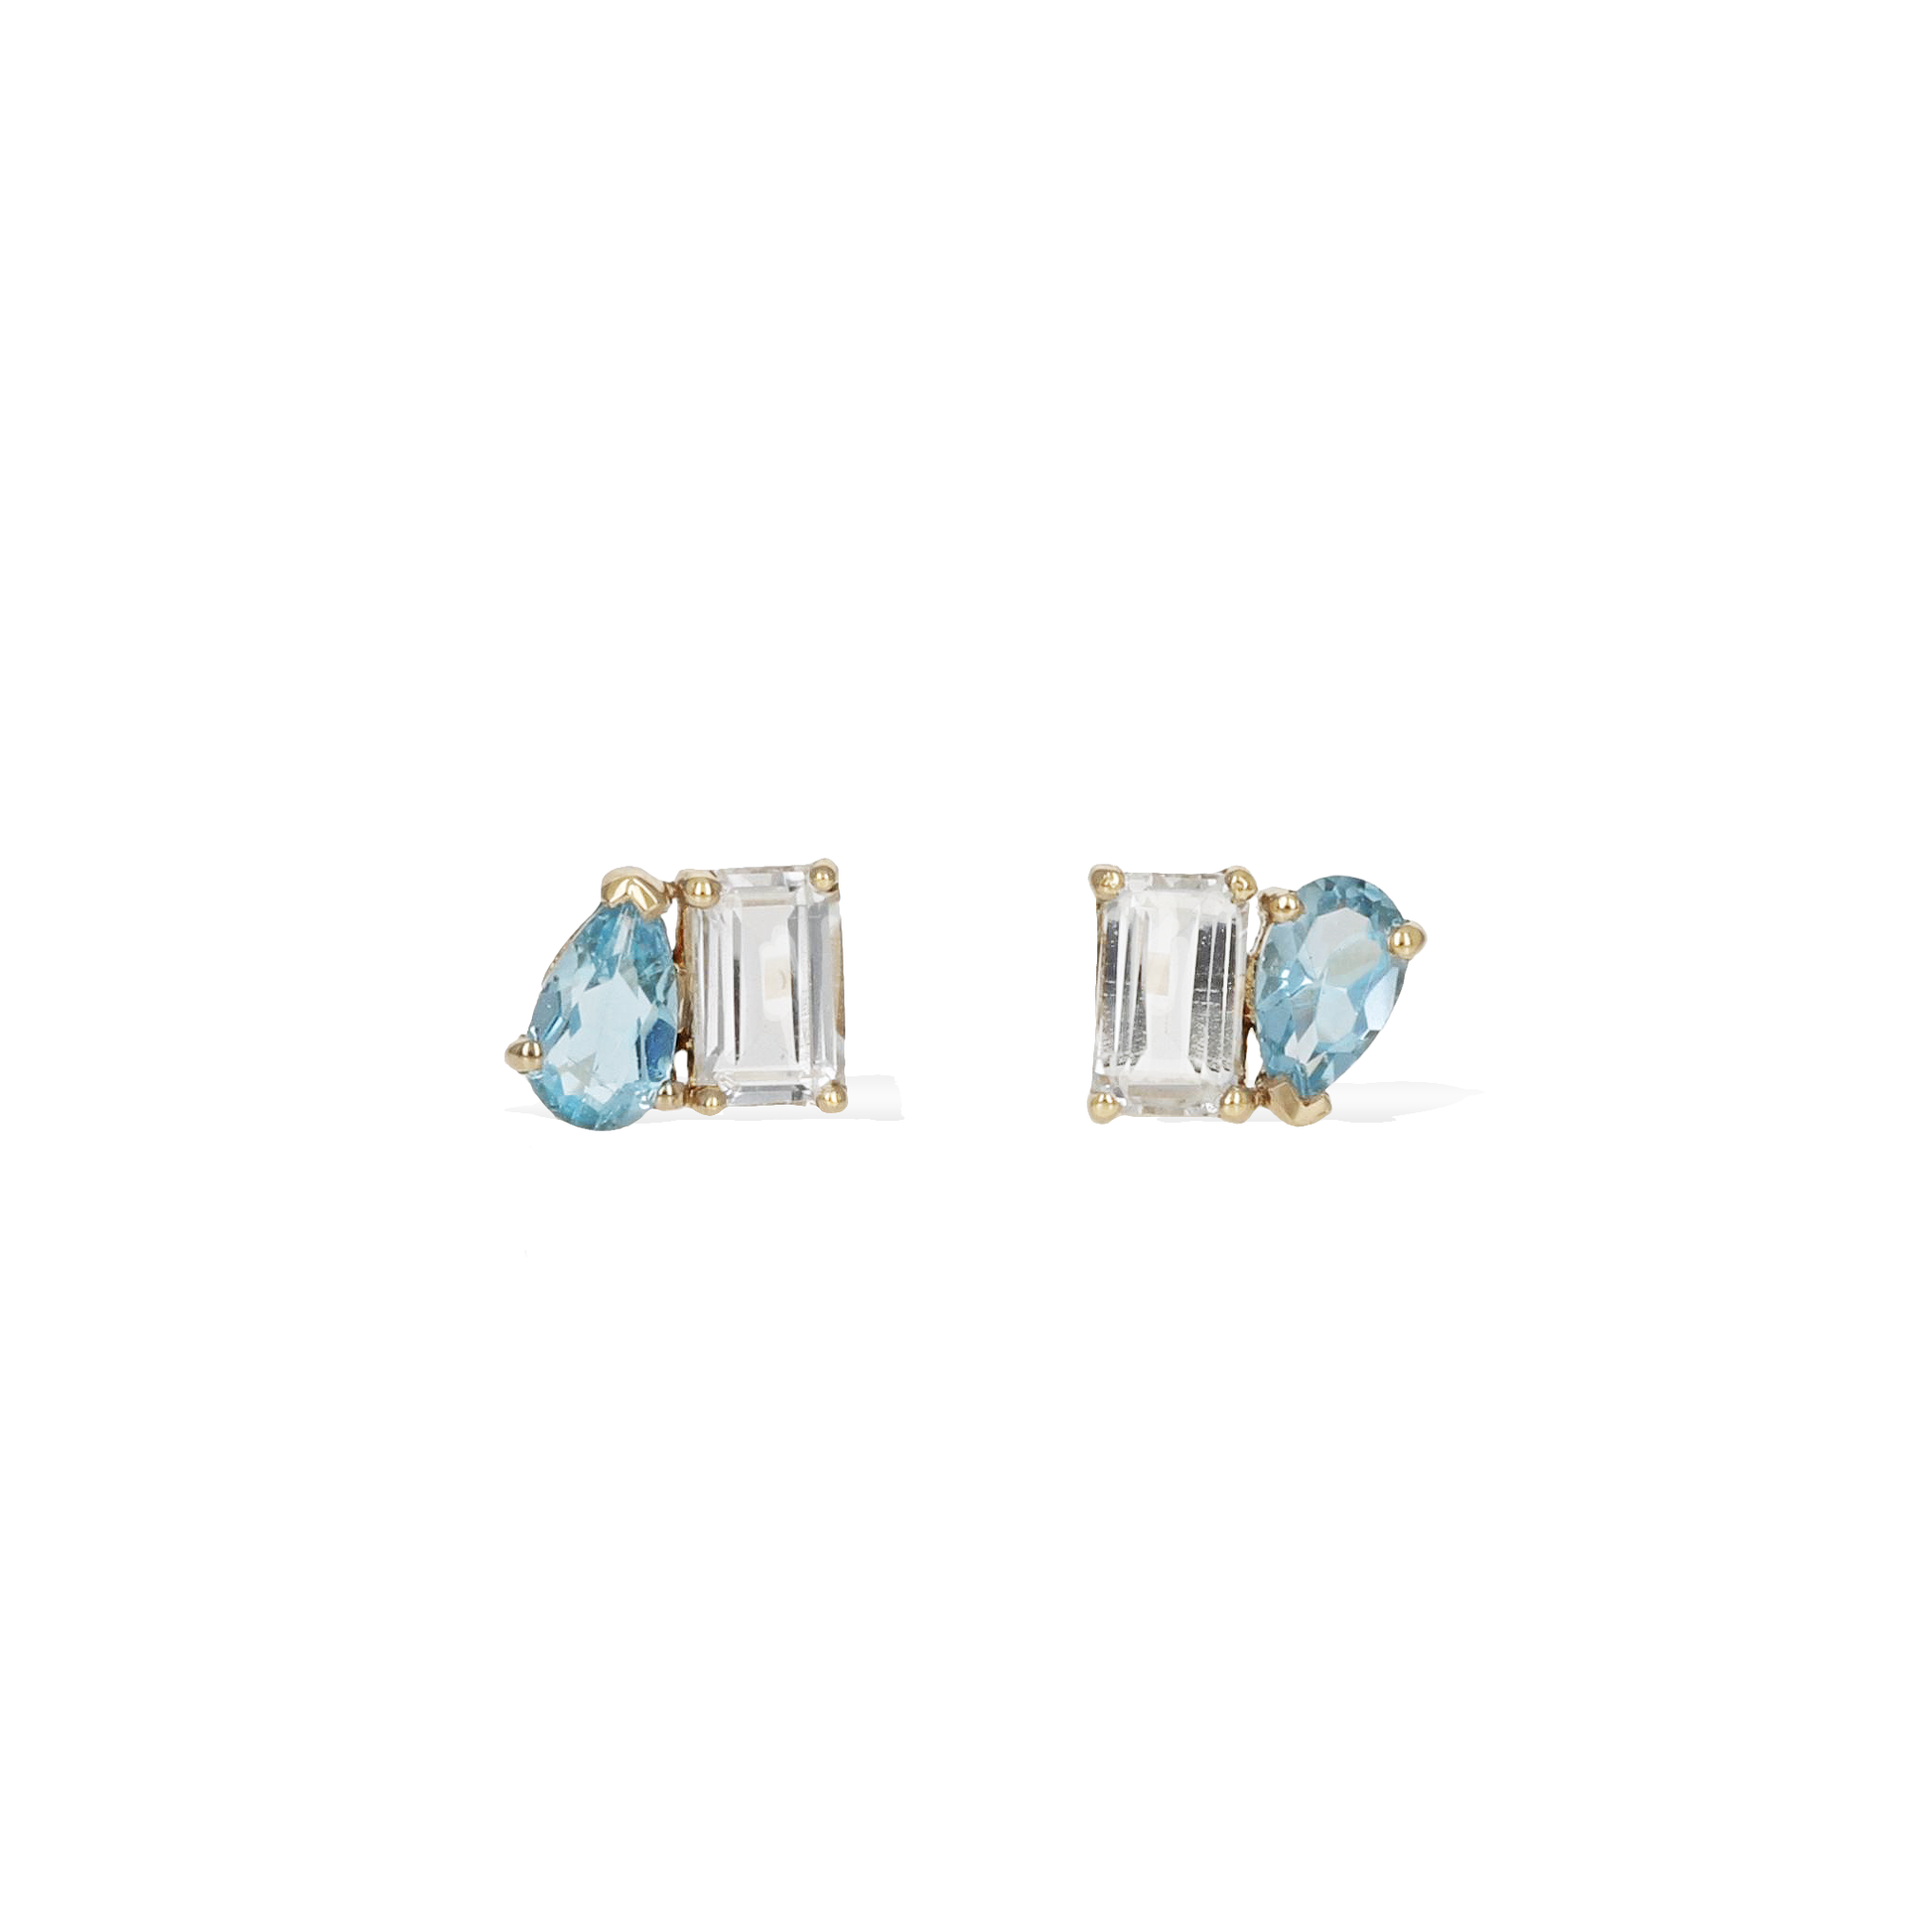 Blue Topaz Toi et Moi Stud Earrings from Alexandra Marks Jewelry